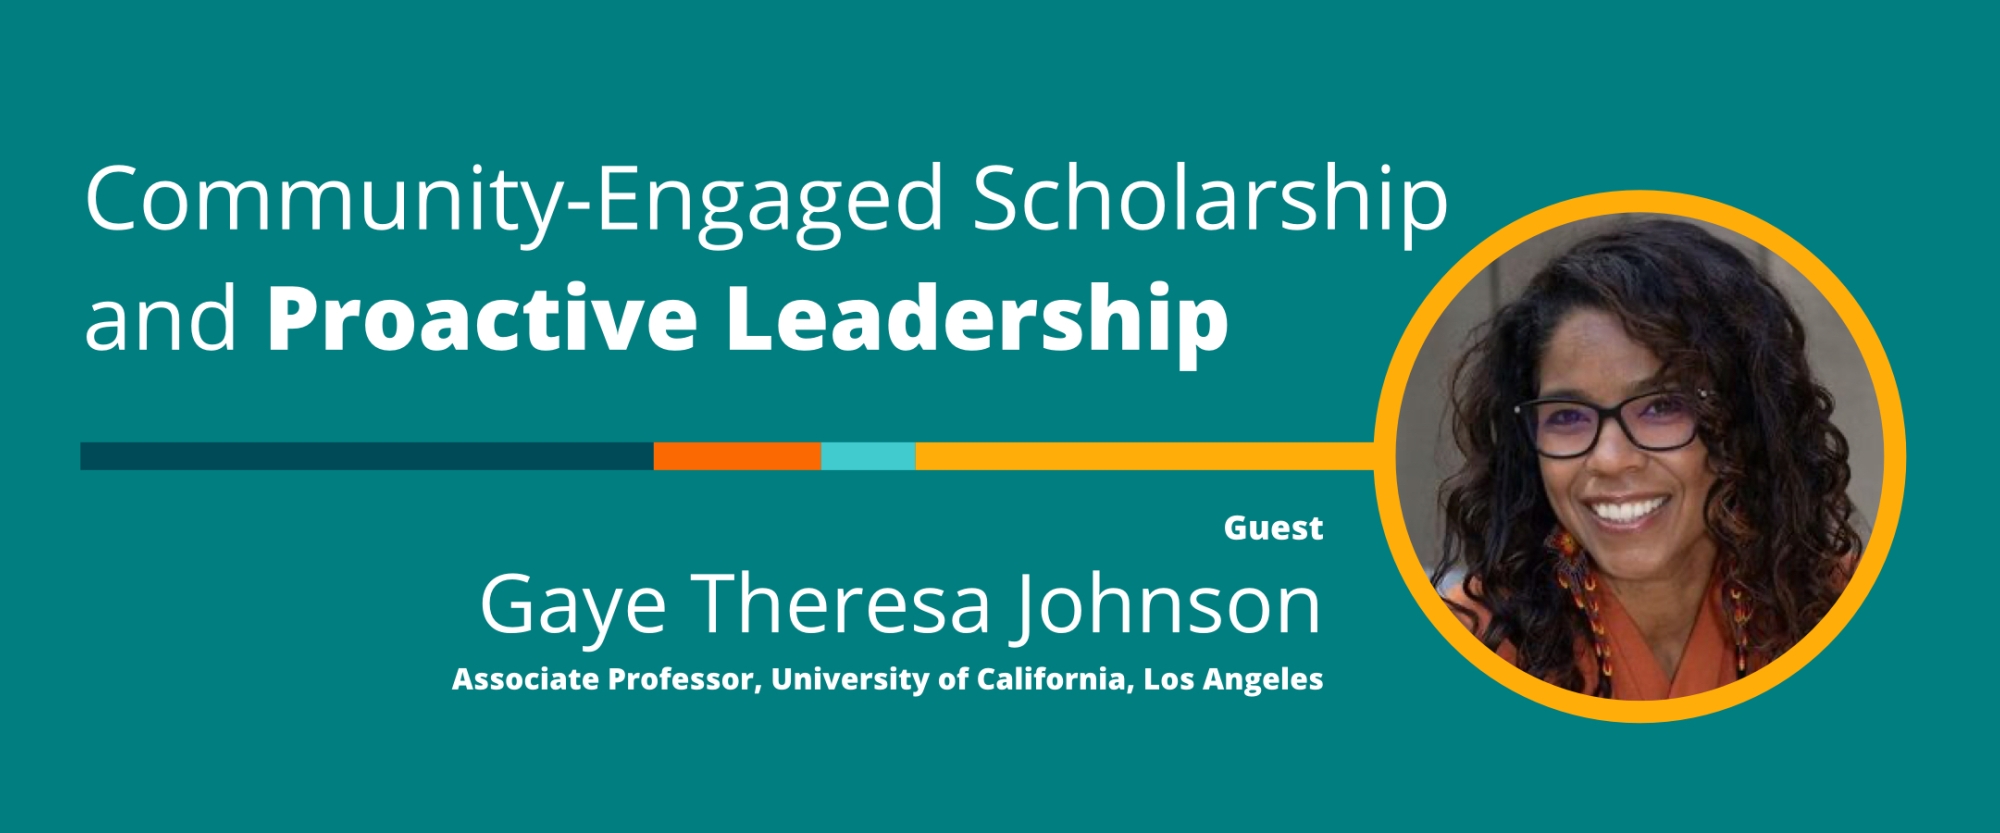 Community-Engaged Scholarship and Proactive Leadership